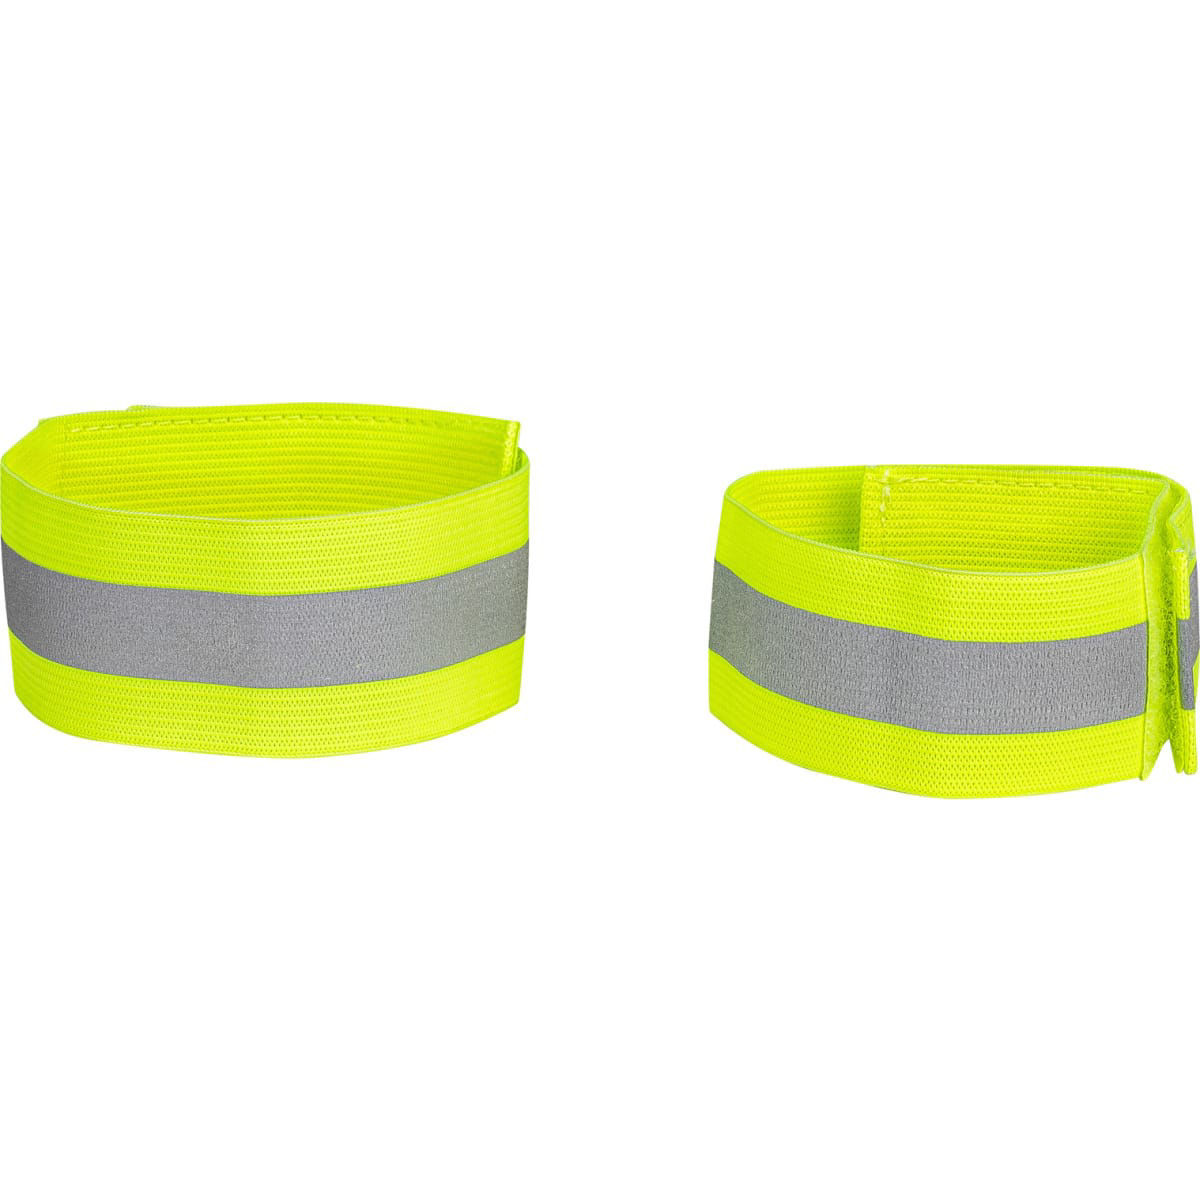 Nordic Grip Reflective 2 Arm/Leg Band Yellow - 2-pack gula mjuka reflexband för armar och ben